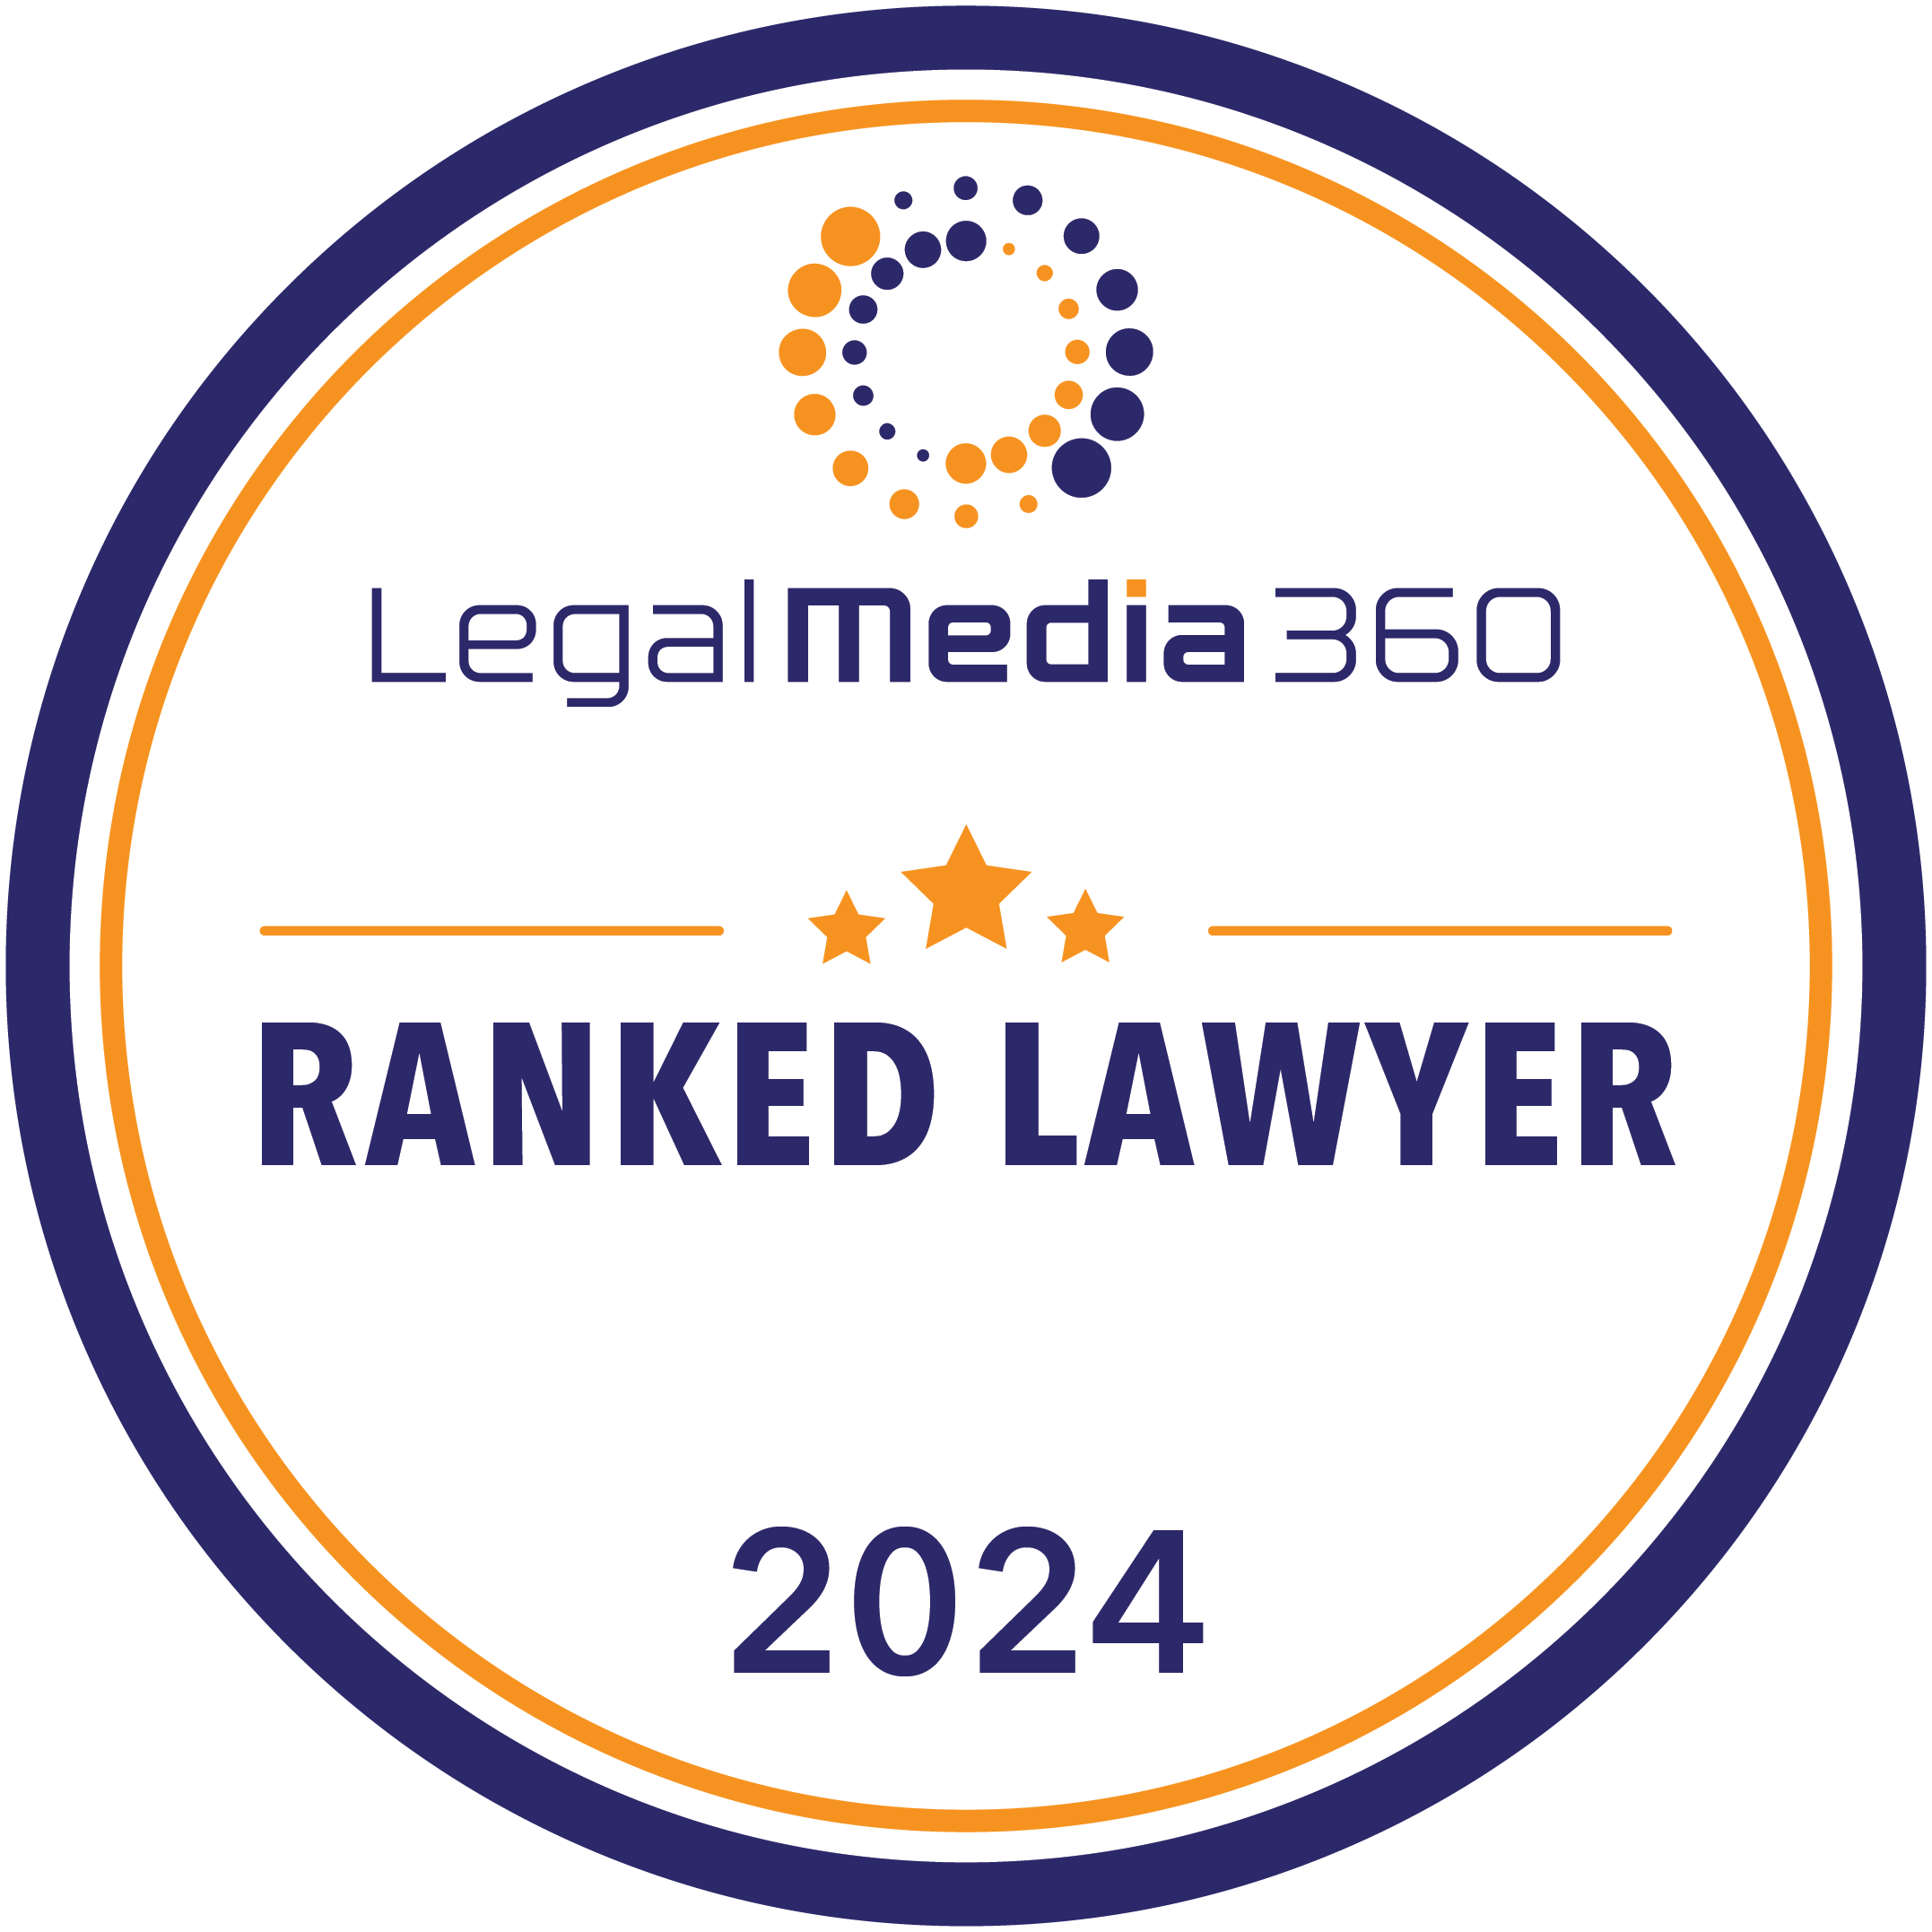 Legal Media 360 Ranked Lawyer Logo 2024